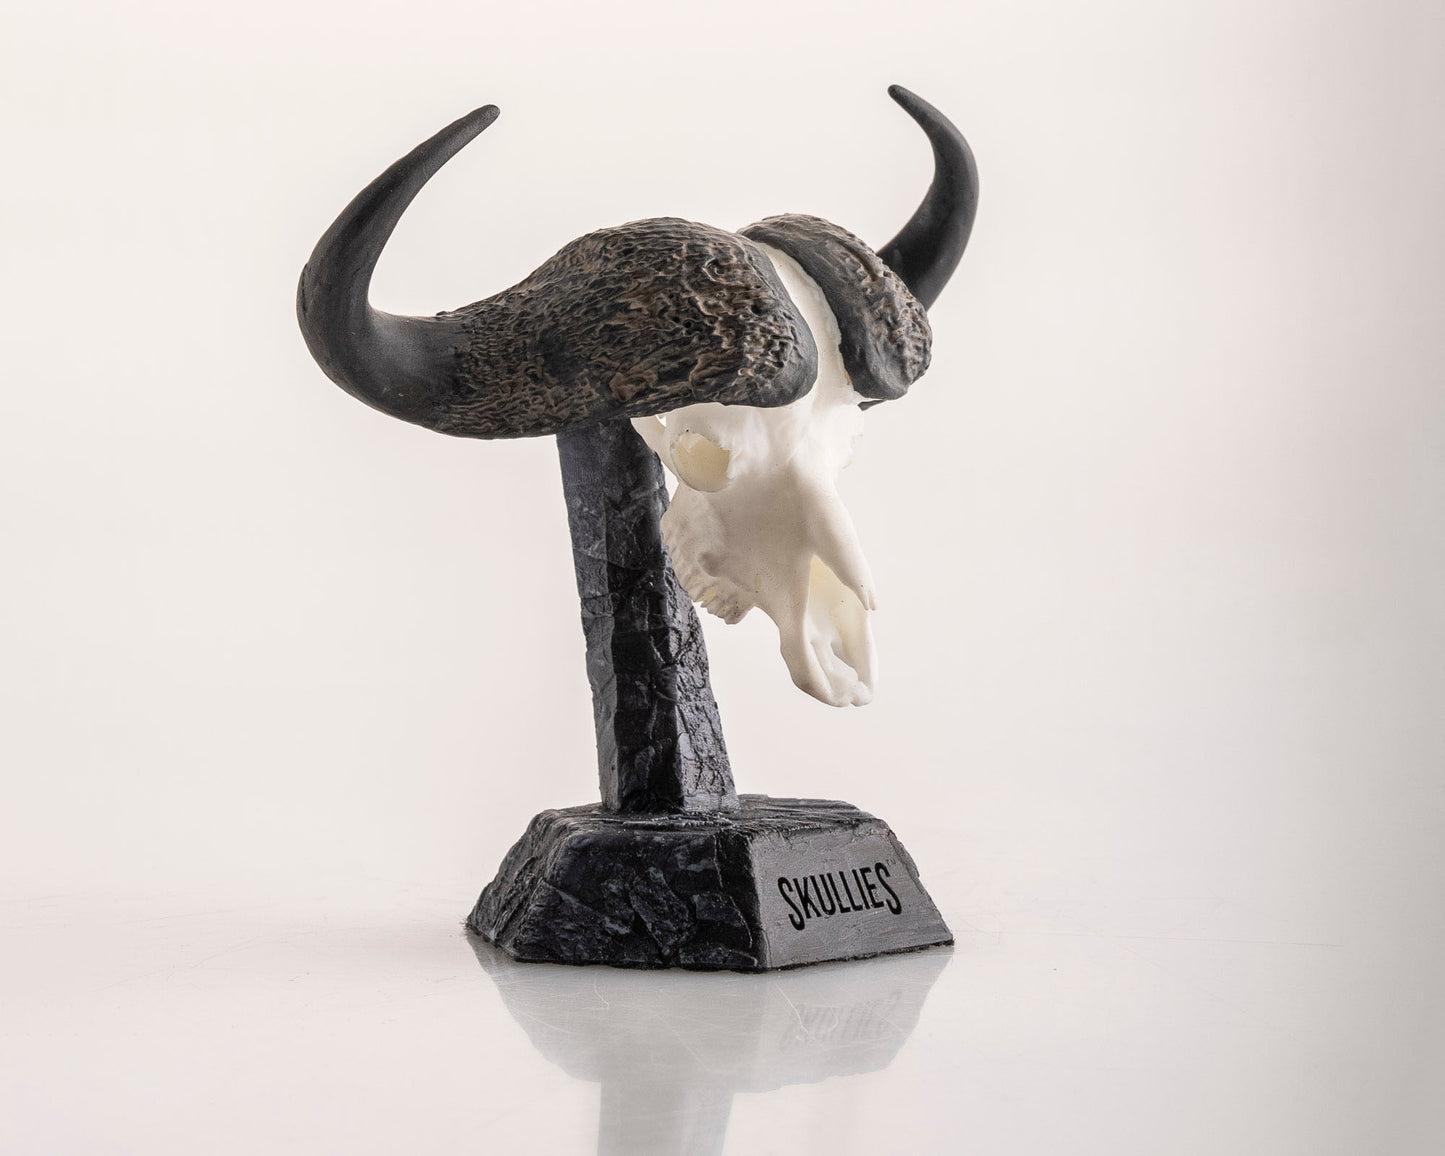 Skullies - Resin - Miniature Replica Buffalo Skull